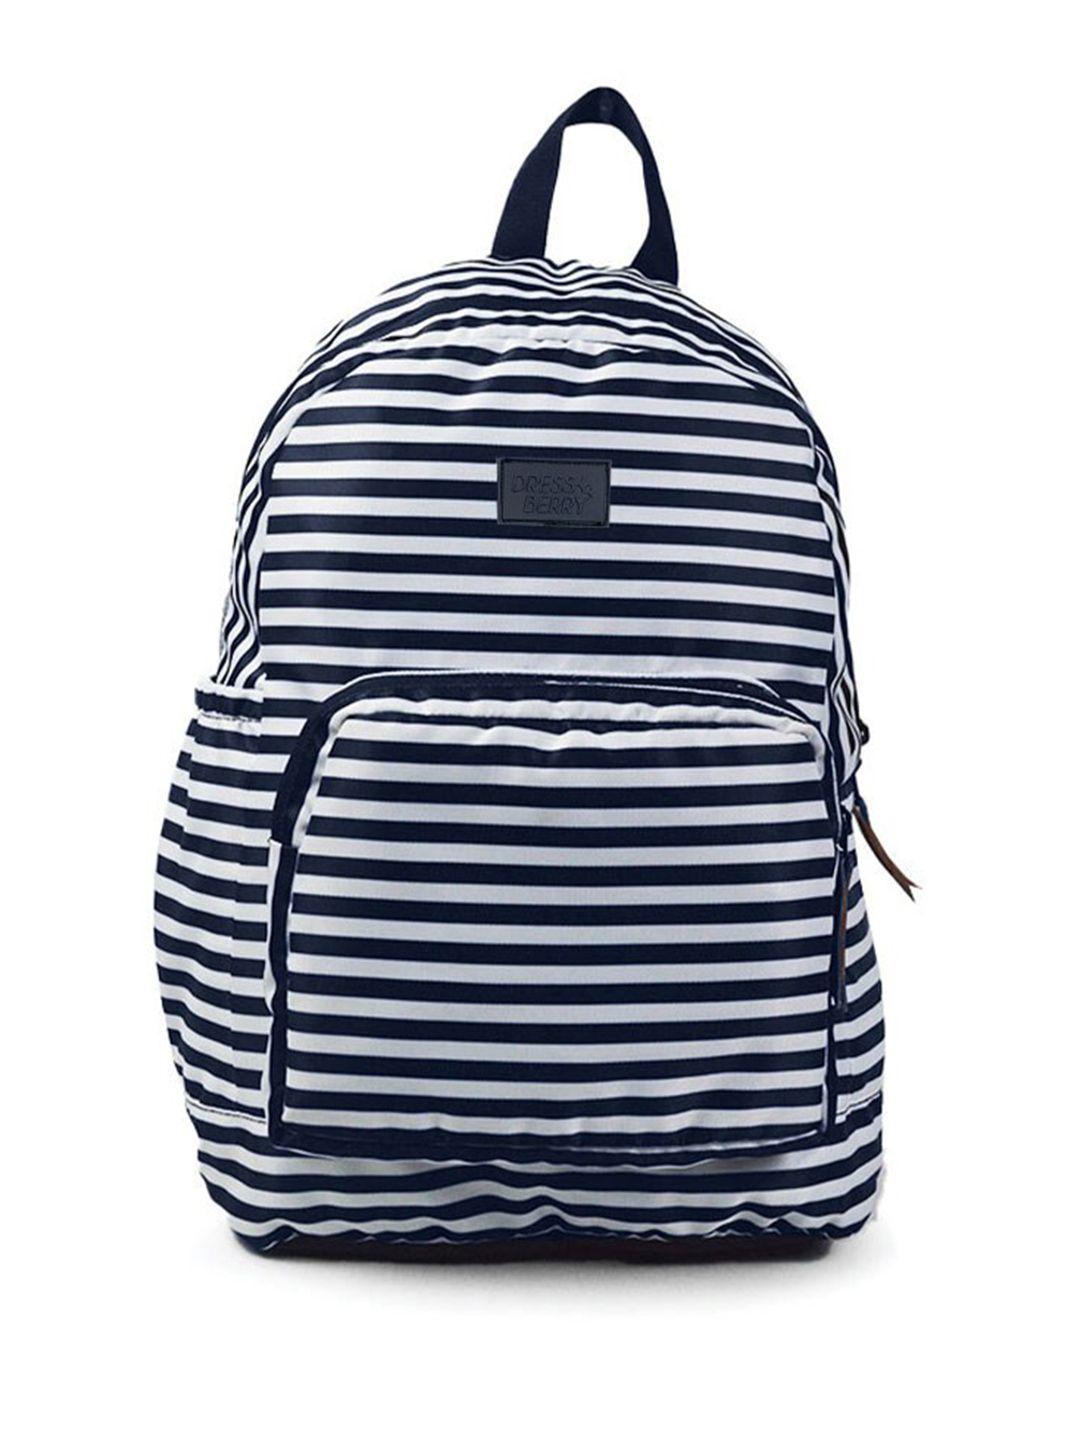 dressberry unisex navy blue striped backpack